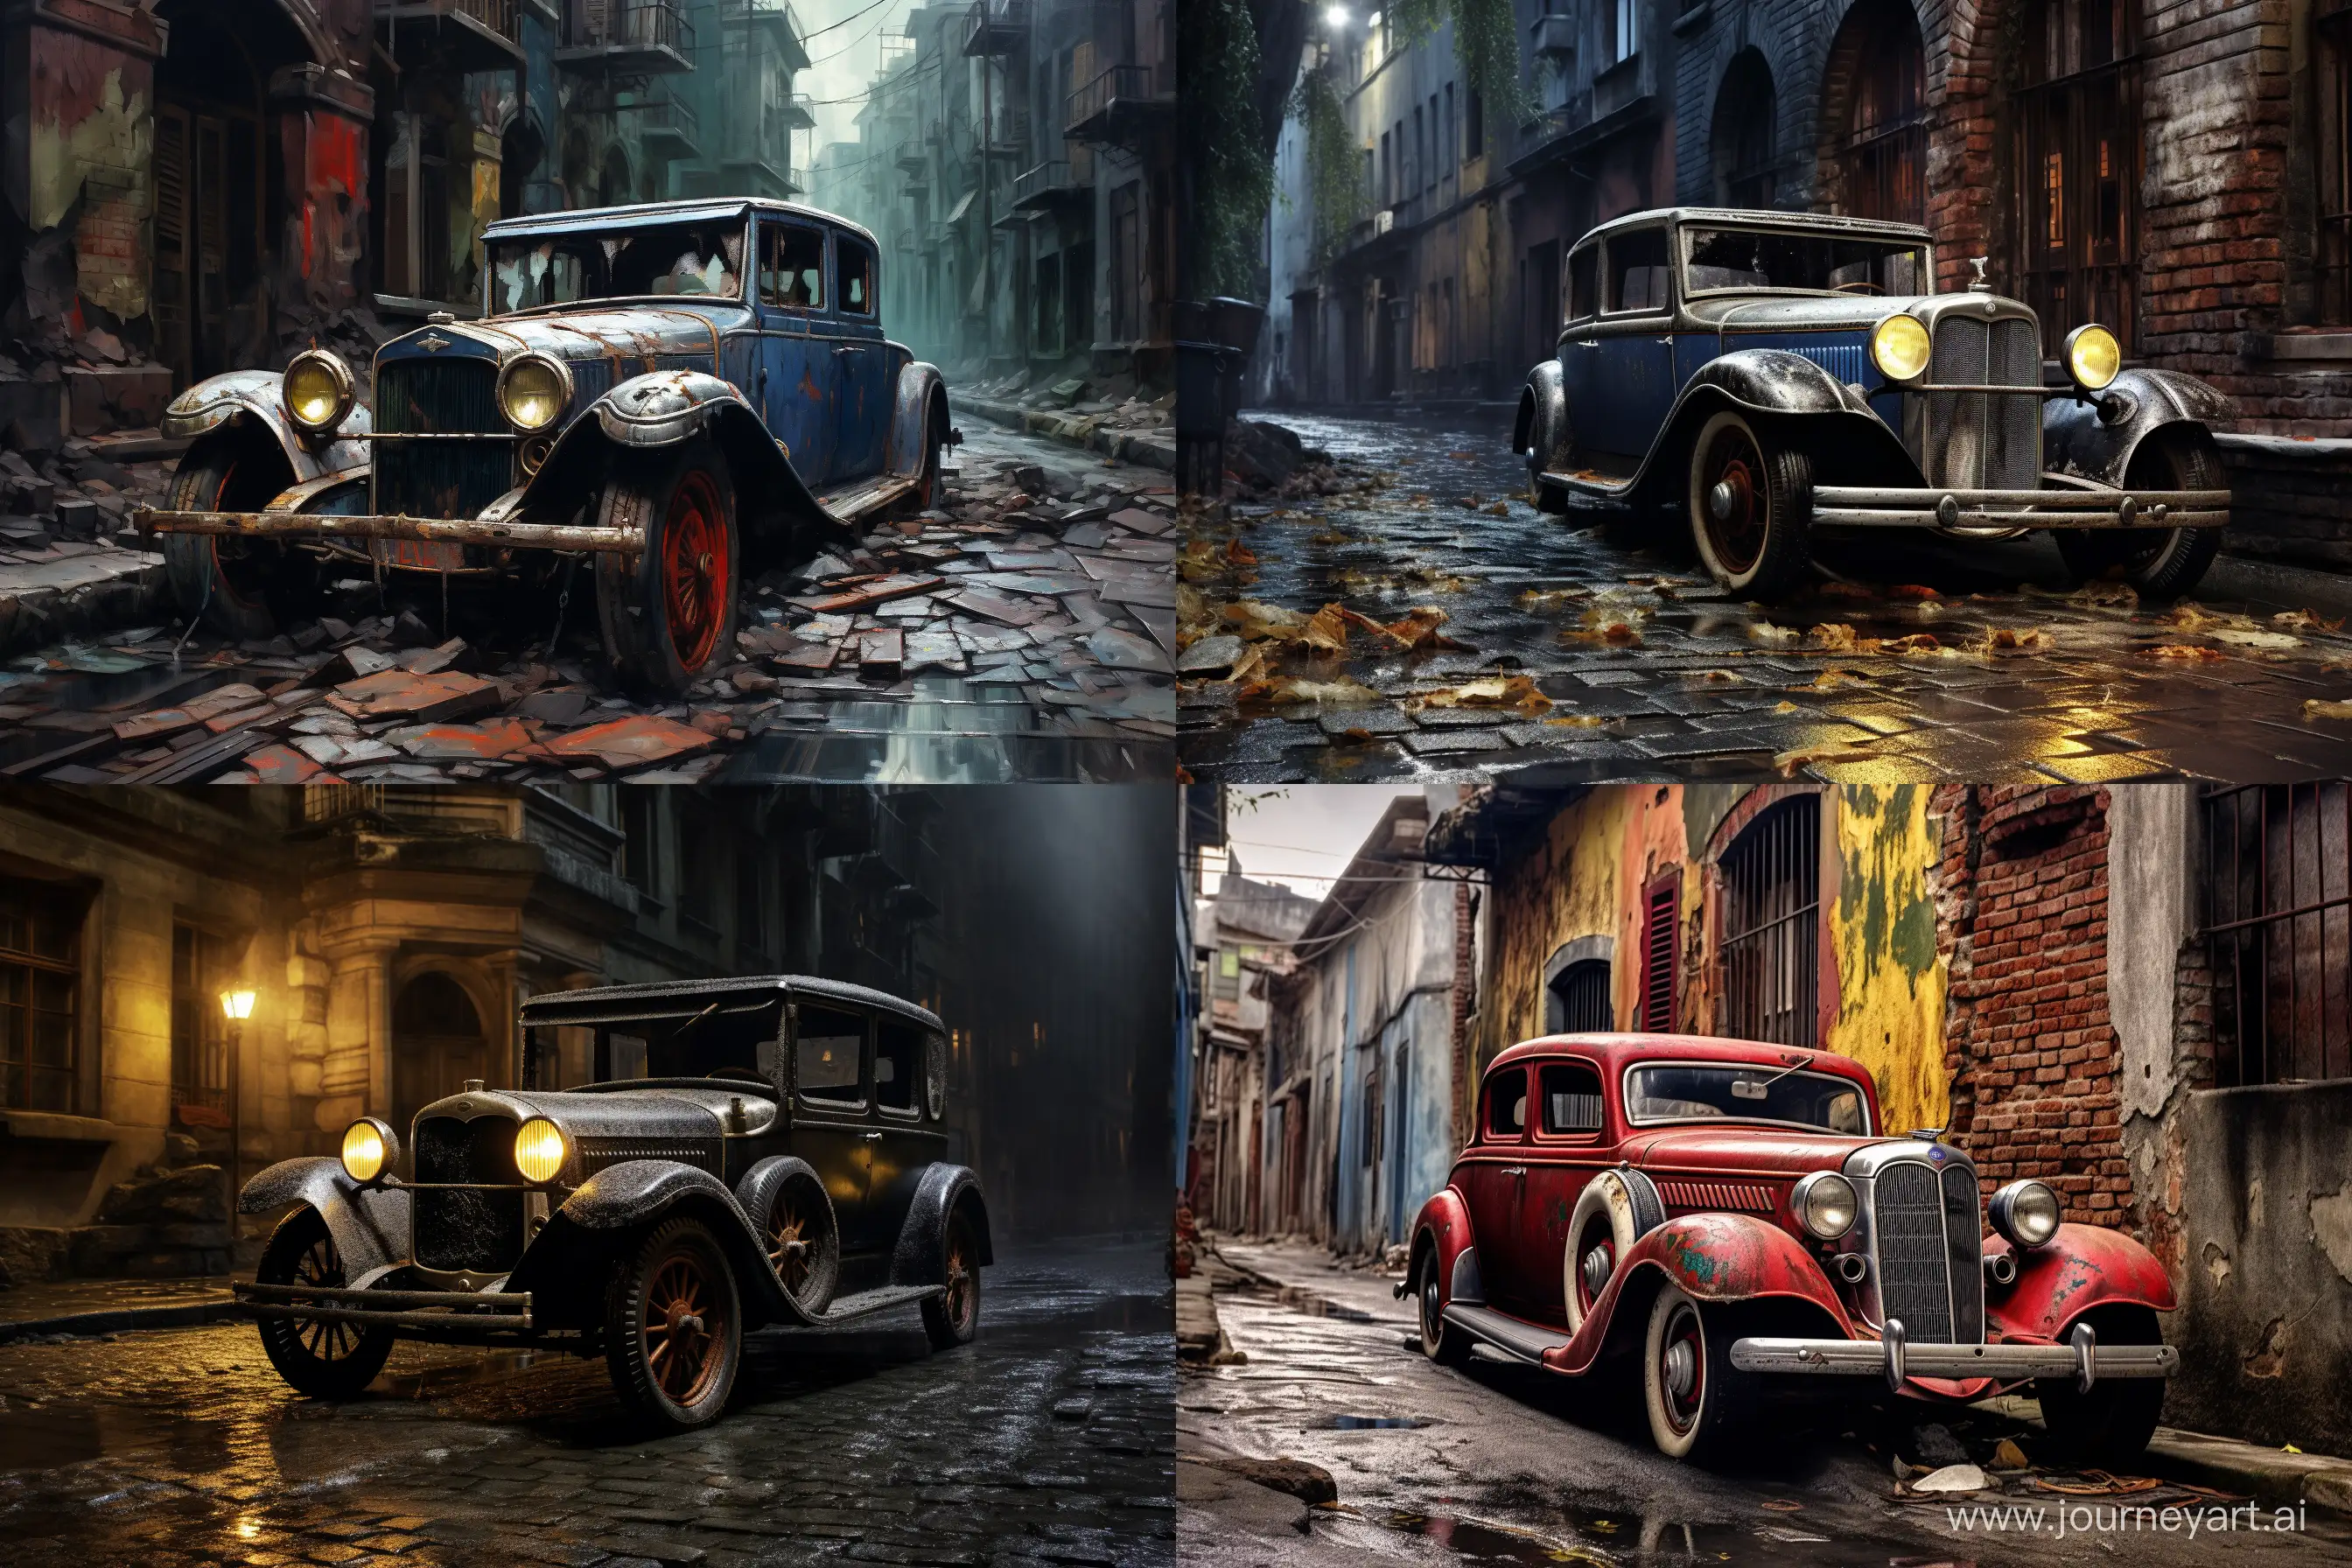 Vintage-Urban-Expressionism-Nostalgic-1900s-Car-on-Cobbled-City-Street